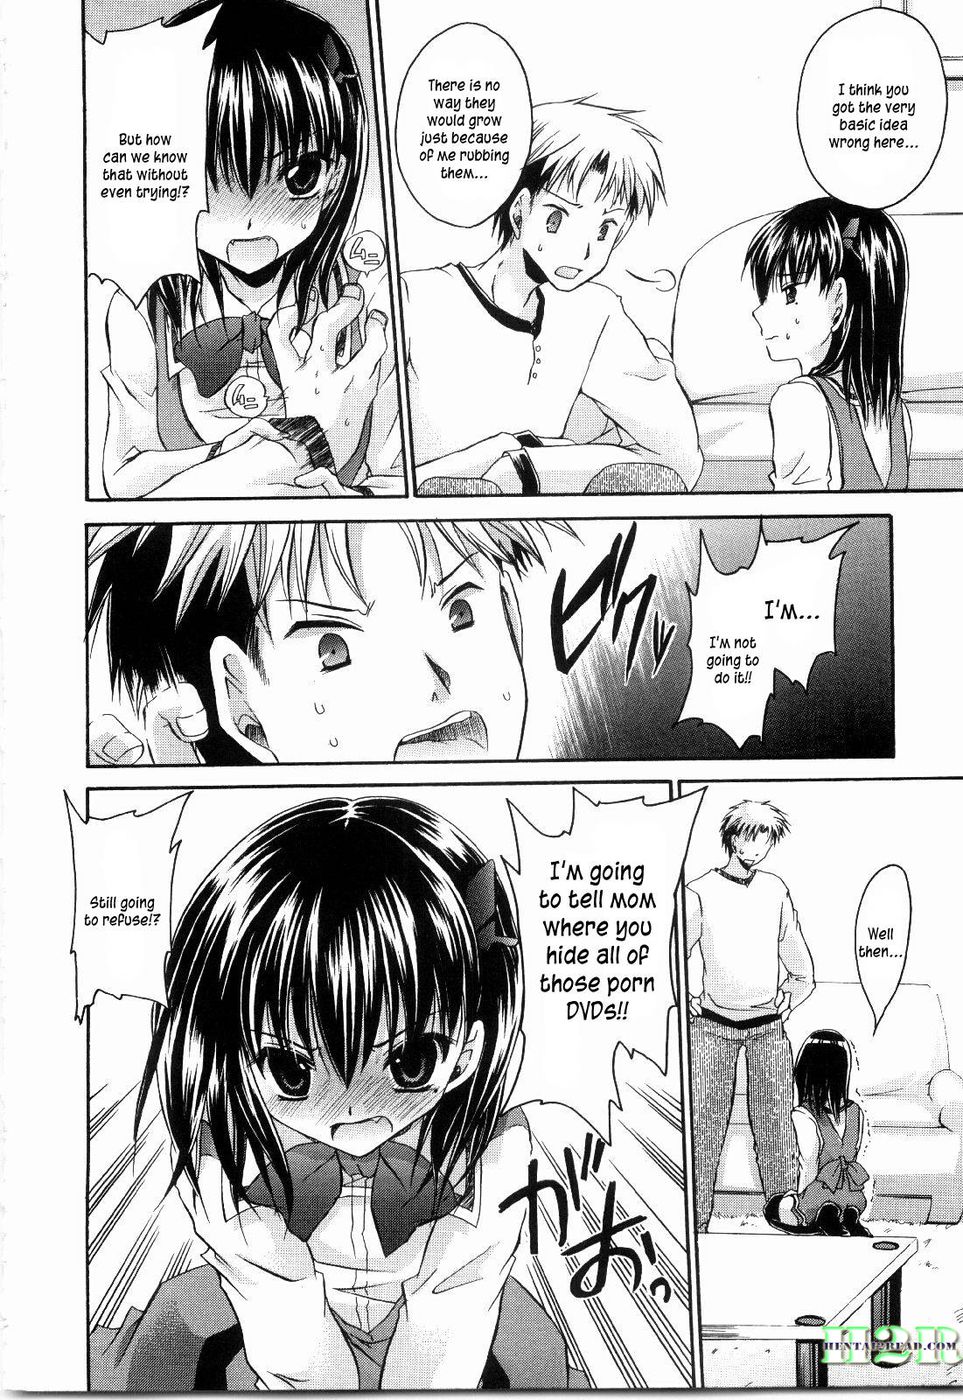 Hentai Manga Comic-Flat-Chested Girl-Read-4